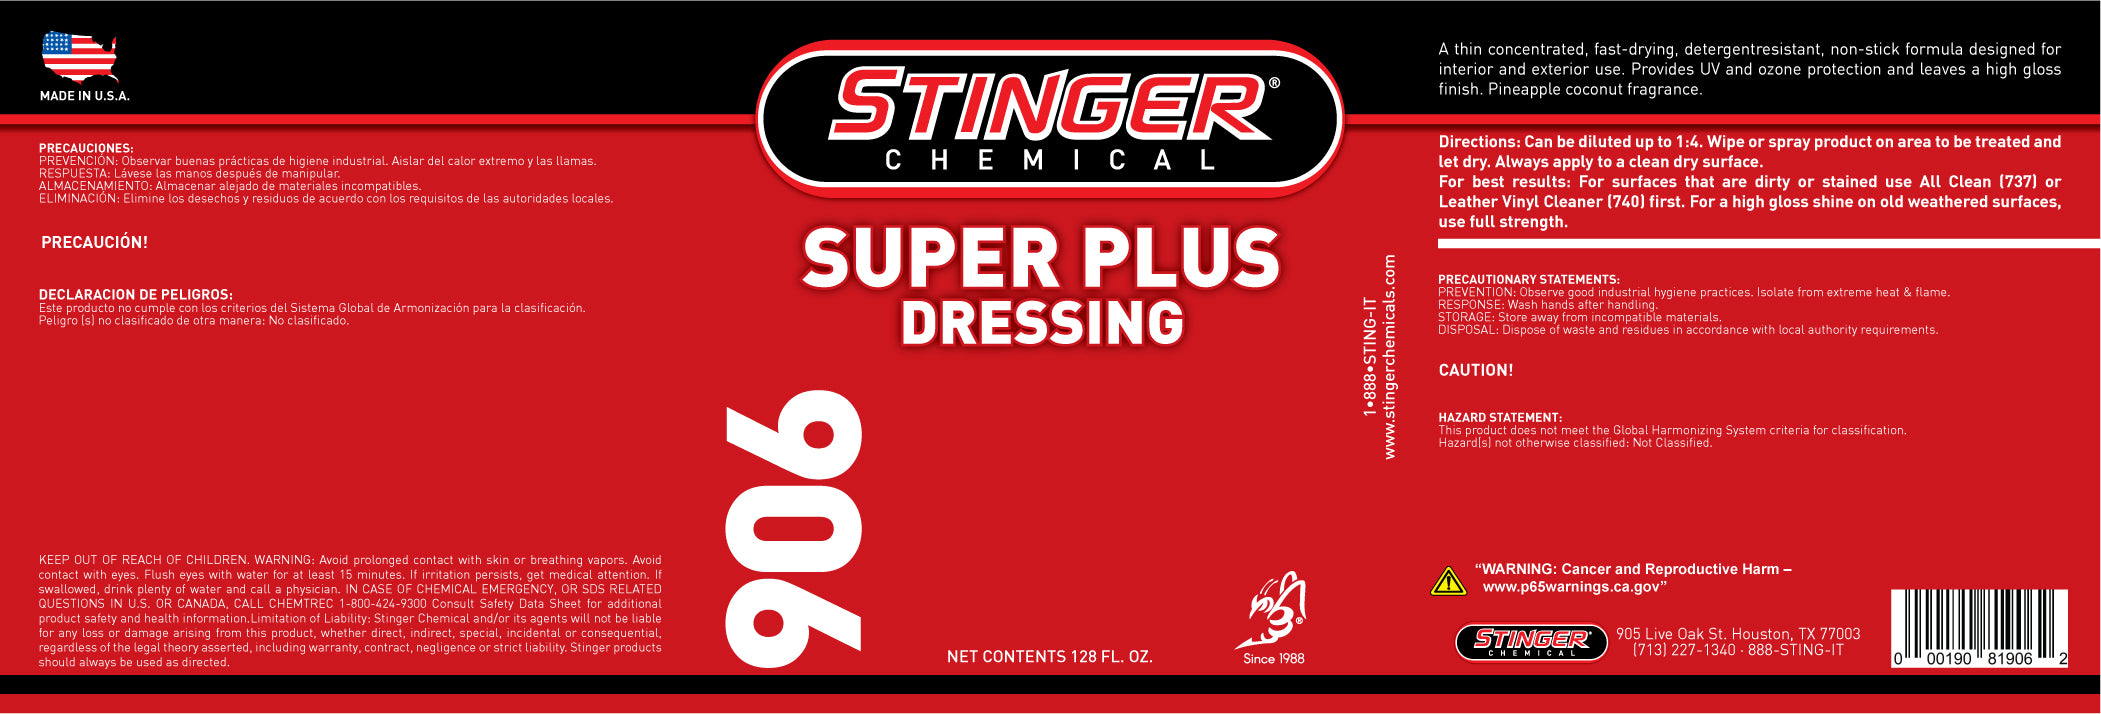 stinger-906-label